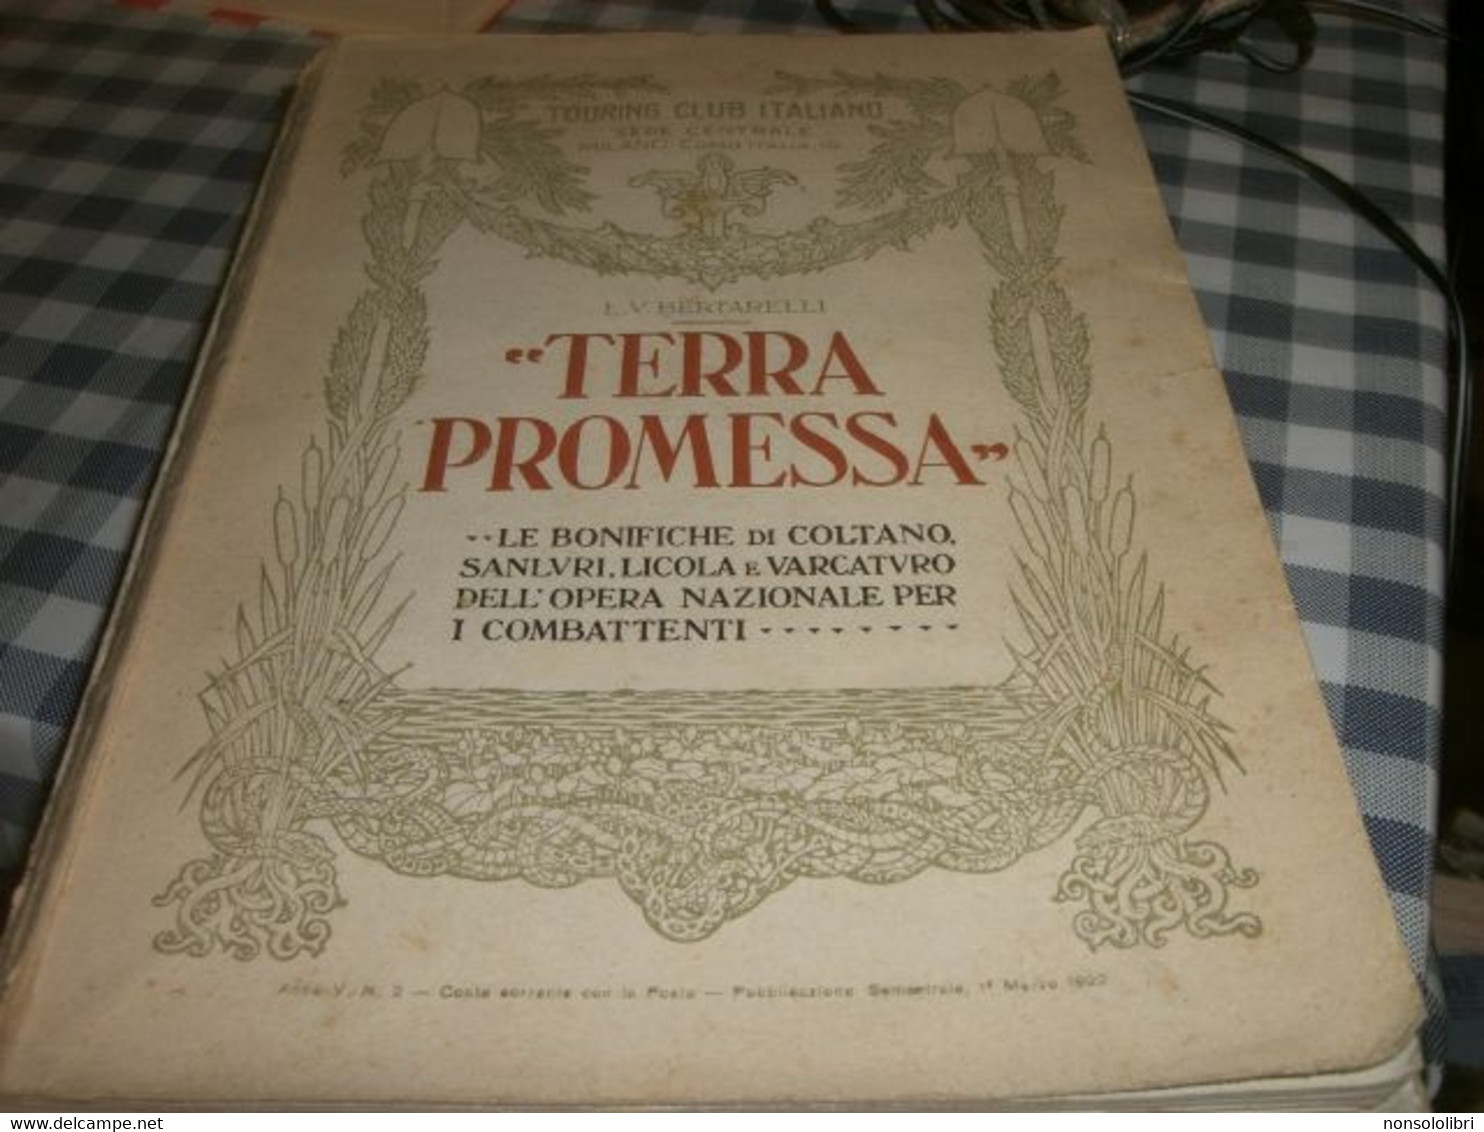 LIBRO TERRA PROMESSA -TOUTING CLUB ITALIANO -BERTARELLI - Société, Politique, économie